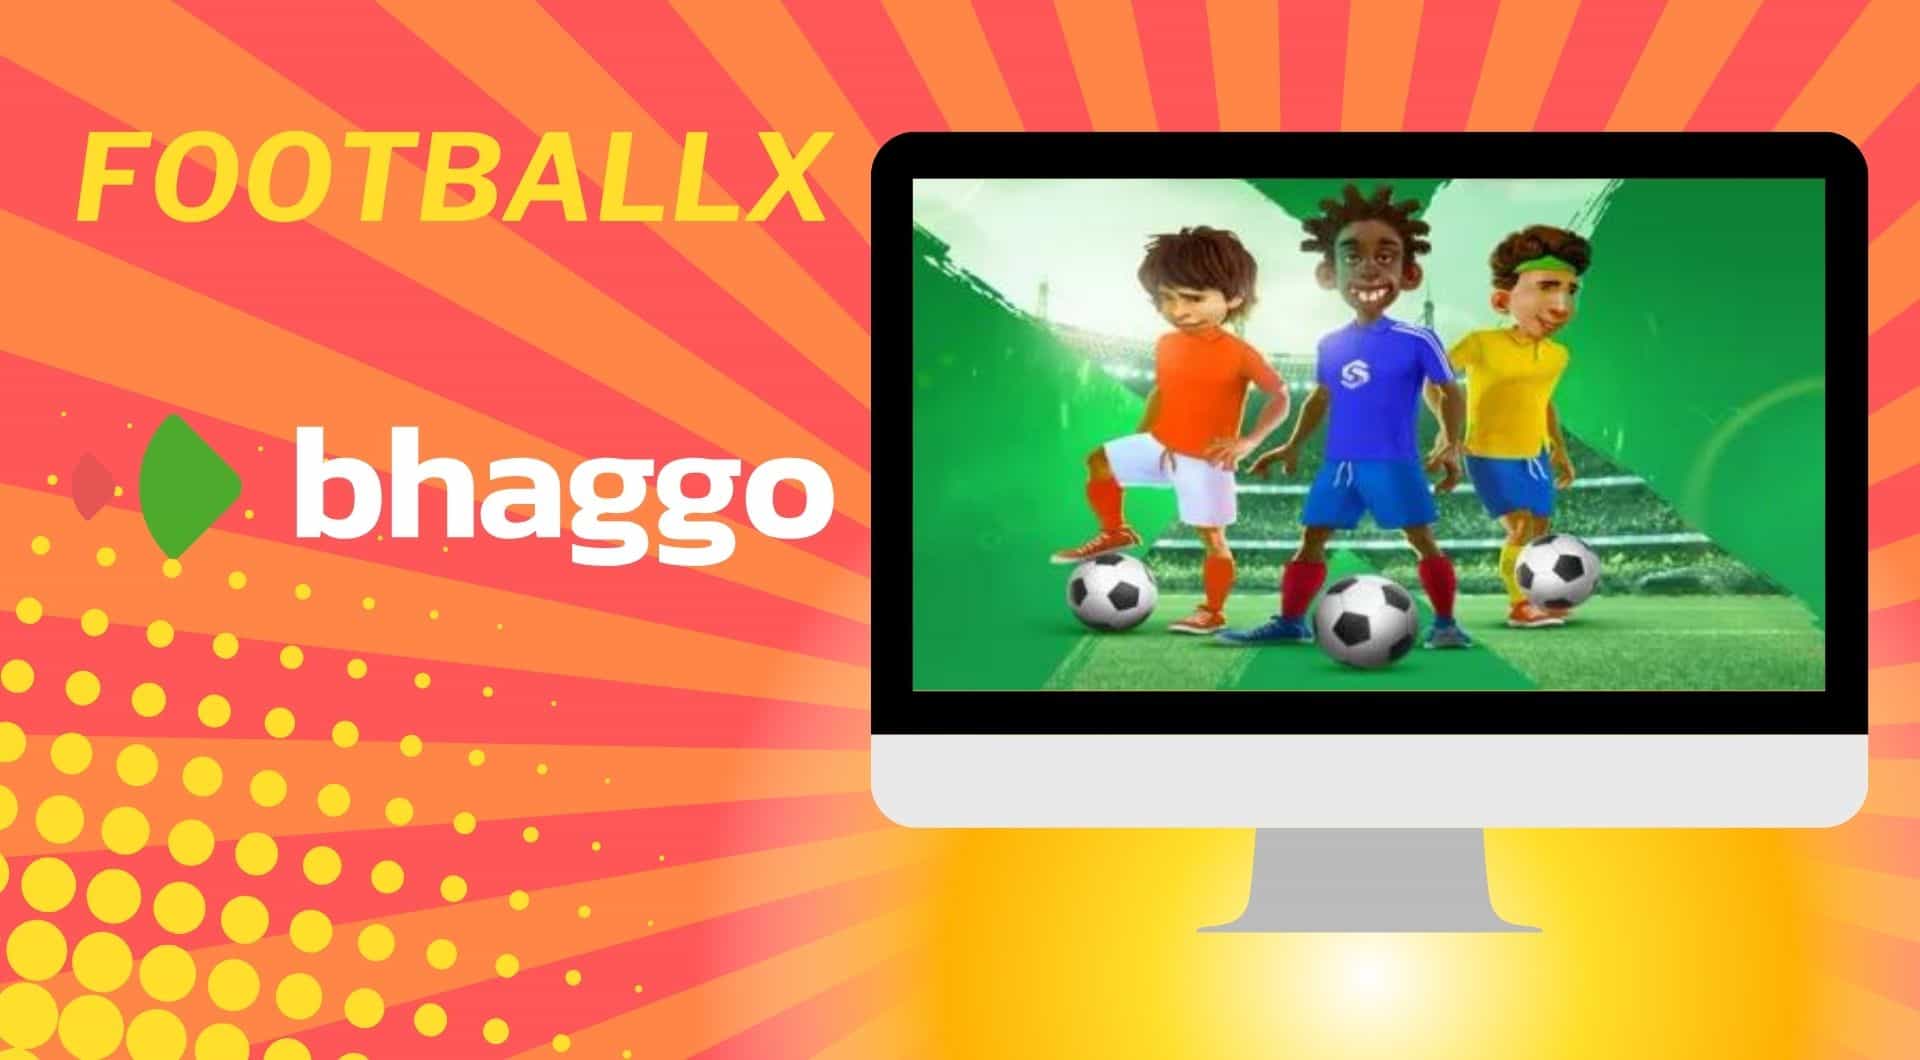 FootballX Bhaggo casino game overview